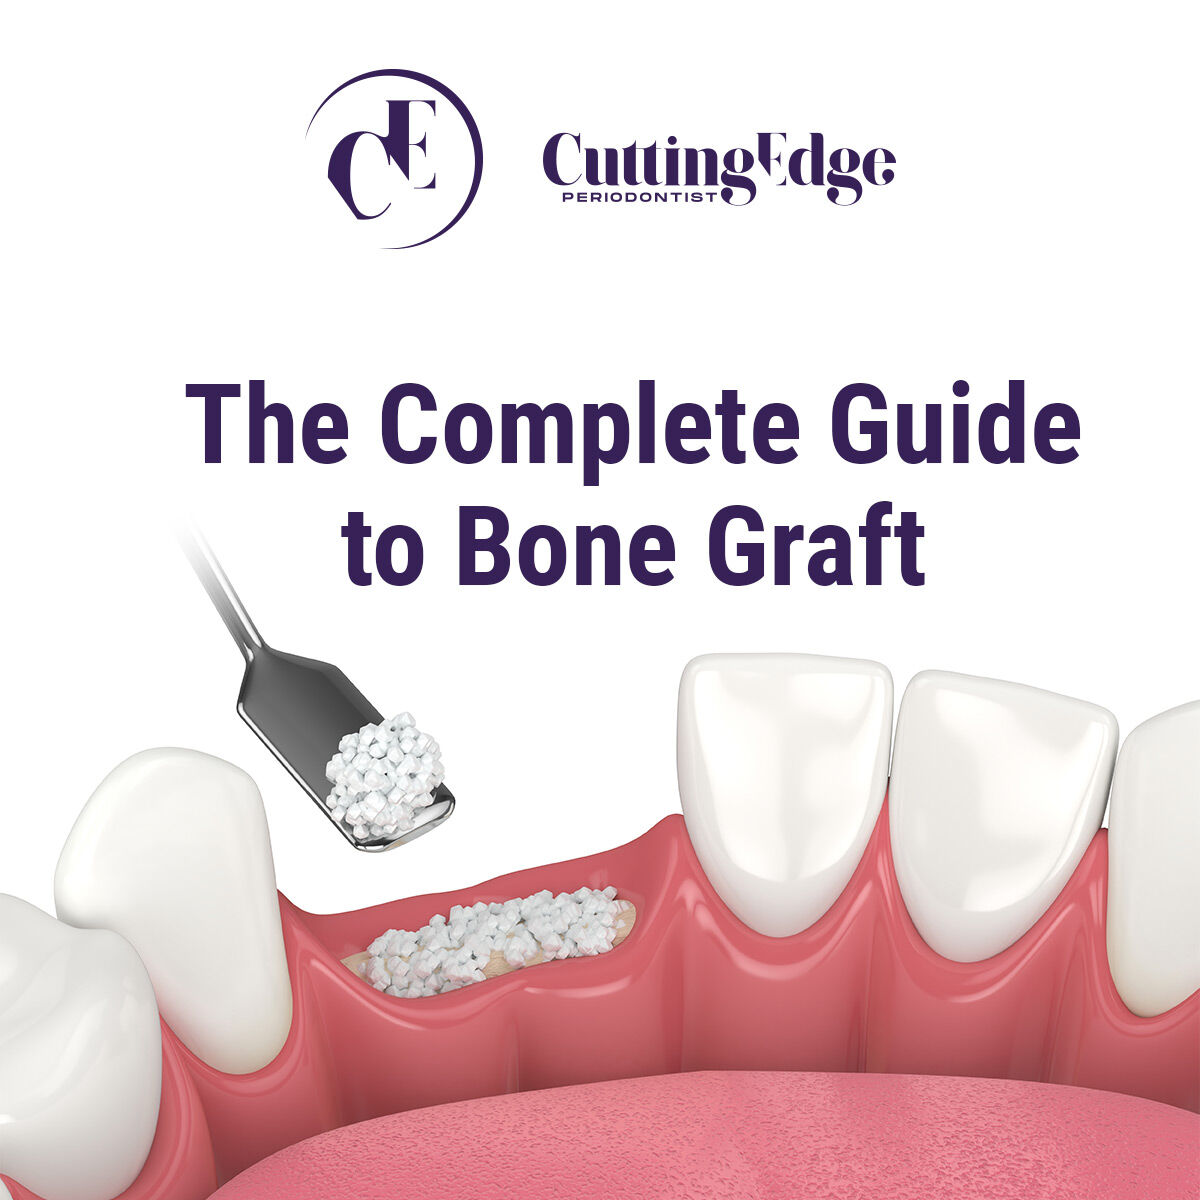 The Complete Guide to Bone Graft - bit.ly/3xy9bOF  #bonegraft #dentalbonegraft #bonegrafting #periodontist #DrDianaSedler #CuttingEdgePeriodontist #Burbank #Glendale